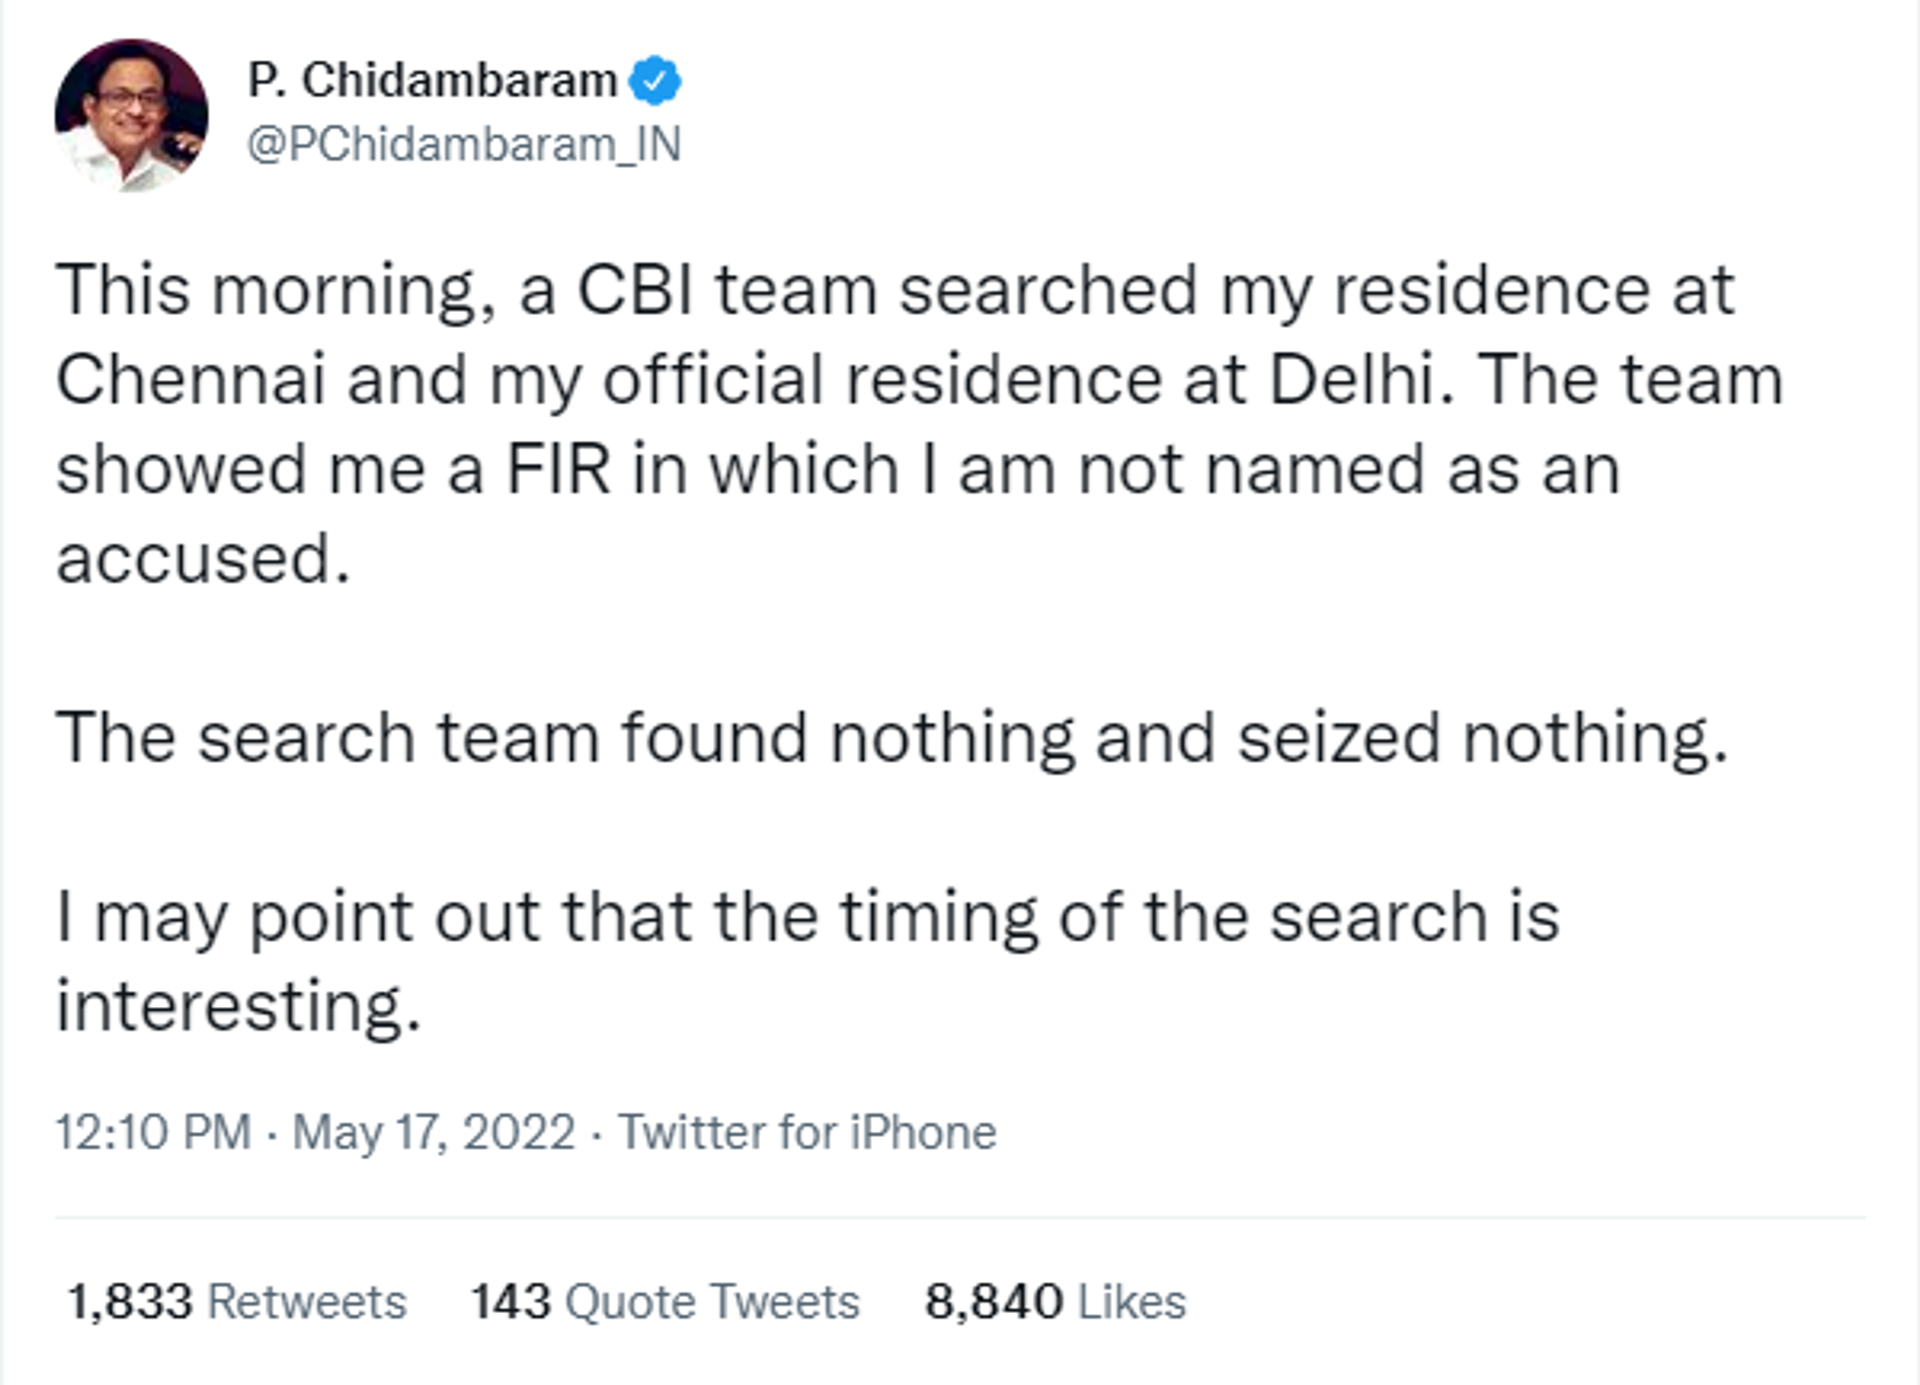 Ex-Federal Minister P. Chidambaram Alleges CBI Showed Him FIR in Which He was Not Even Named - Sputnik International, 1920, 17.05.2022